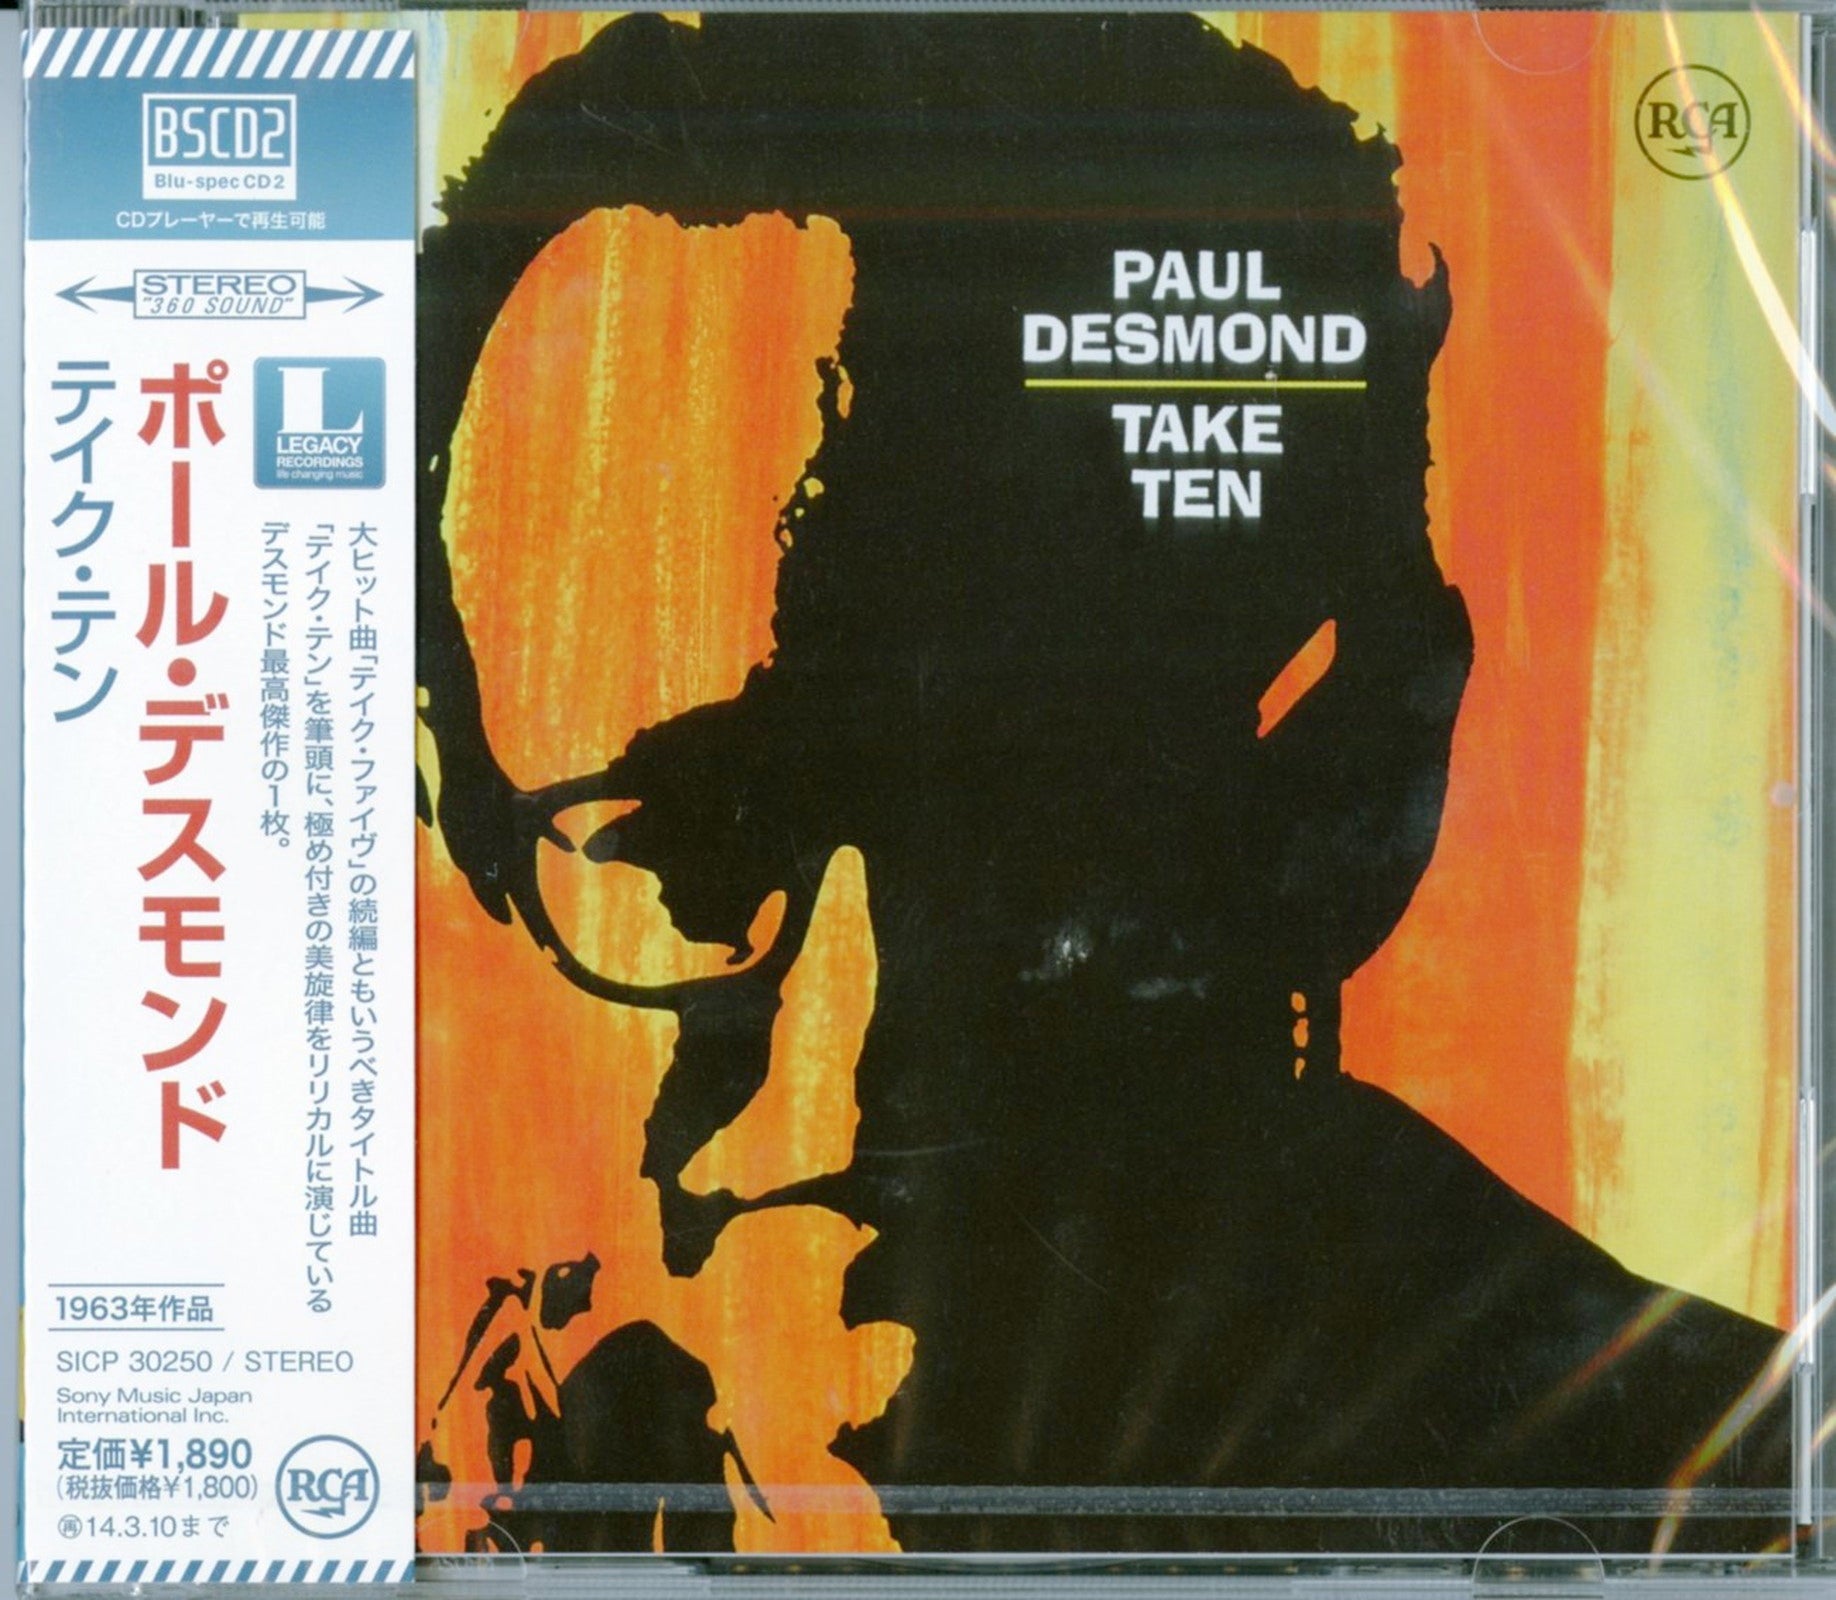 Paul Desmond Take Ten Japan Blu-spec CD2 CDs Vinyl Japan Store